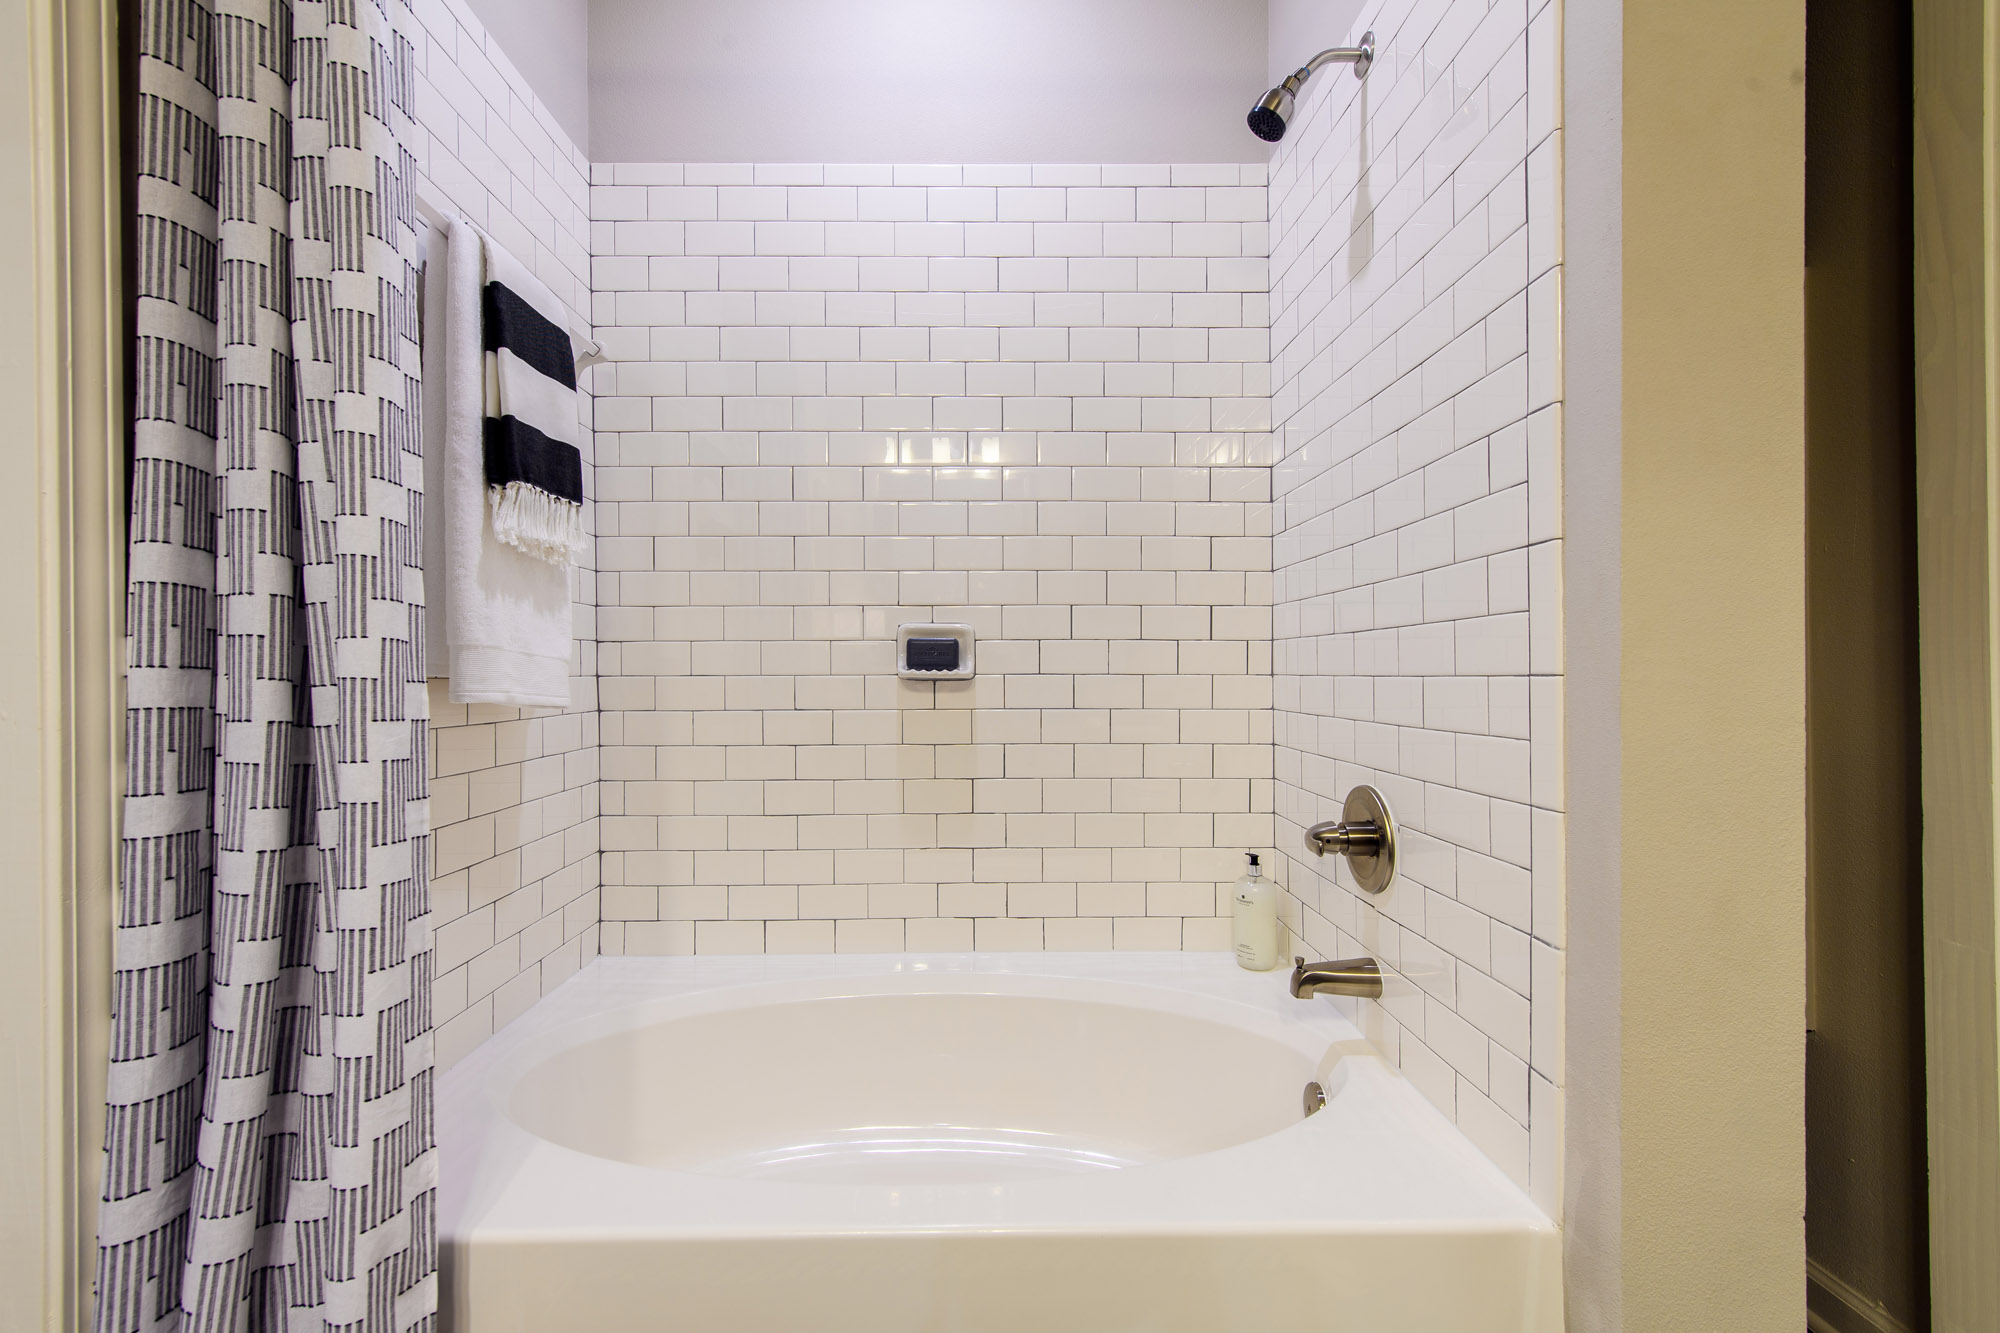 White subway tiled bathroom with oval soaking tub